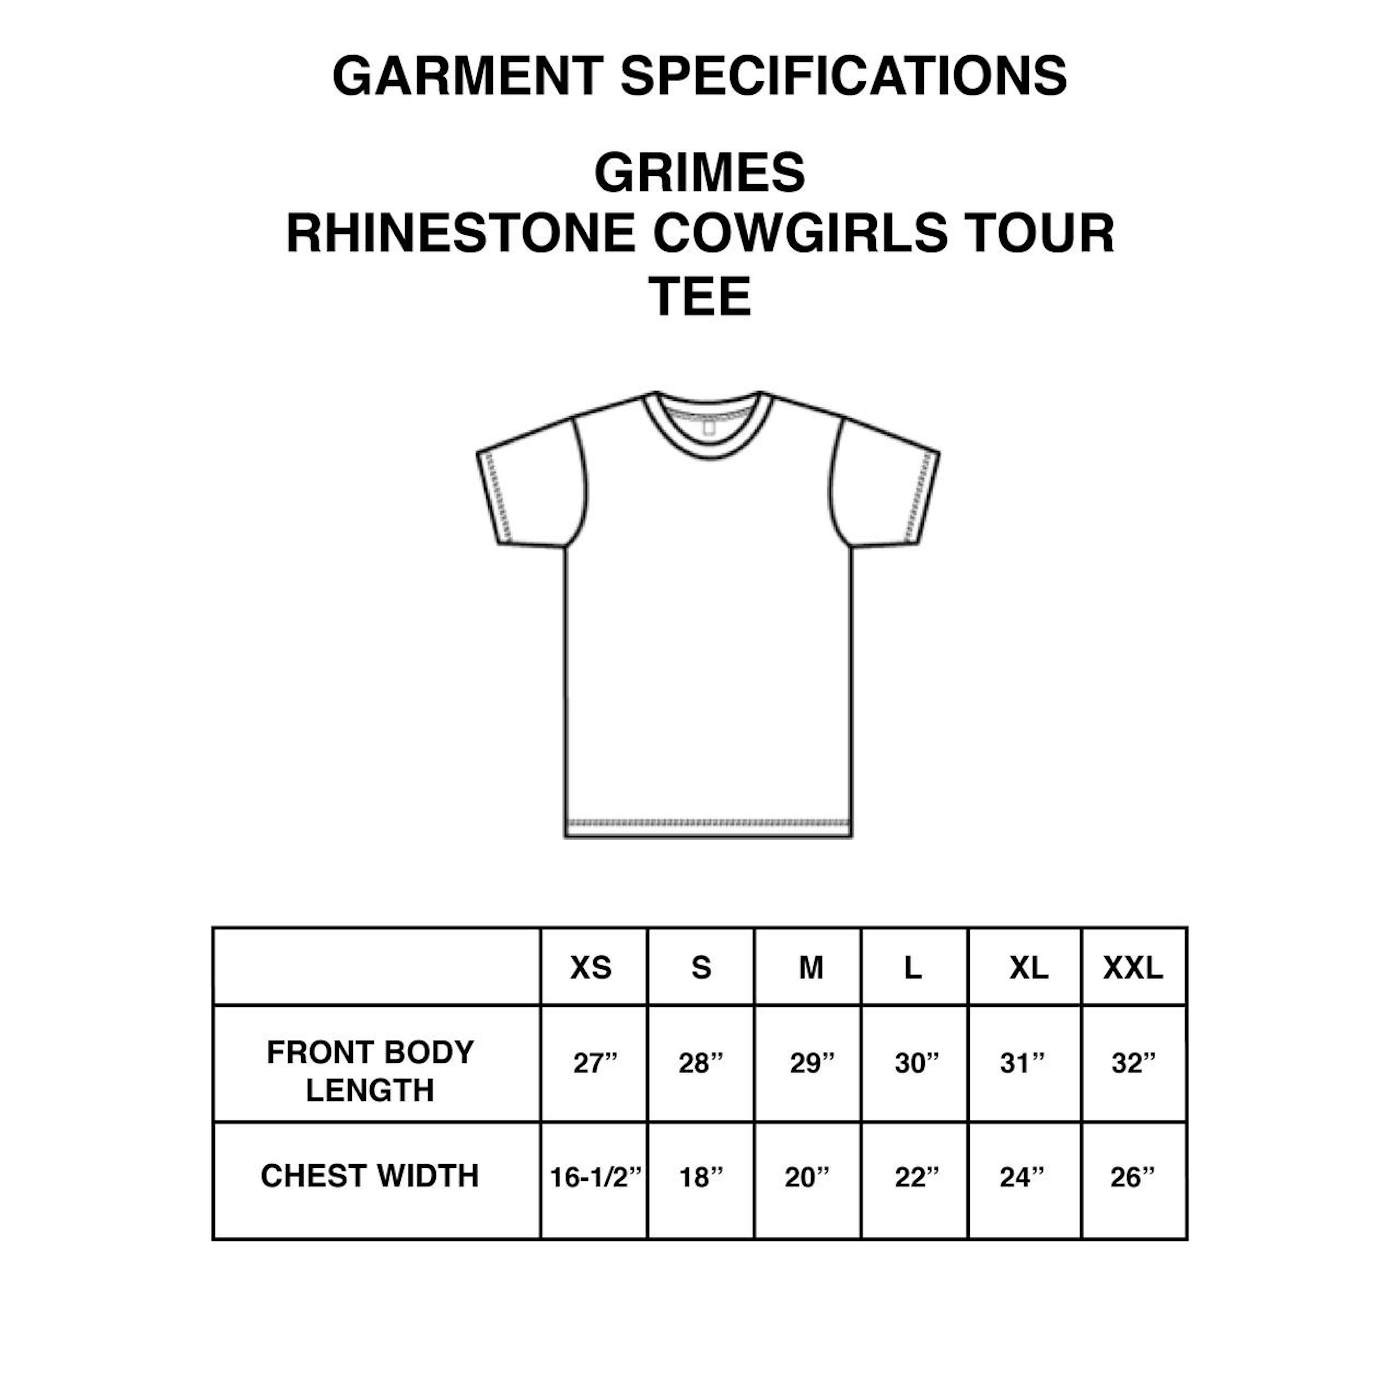 Grimes Rhinestone Cowgirls Tour Tee